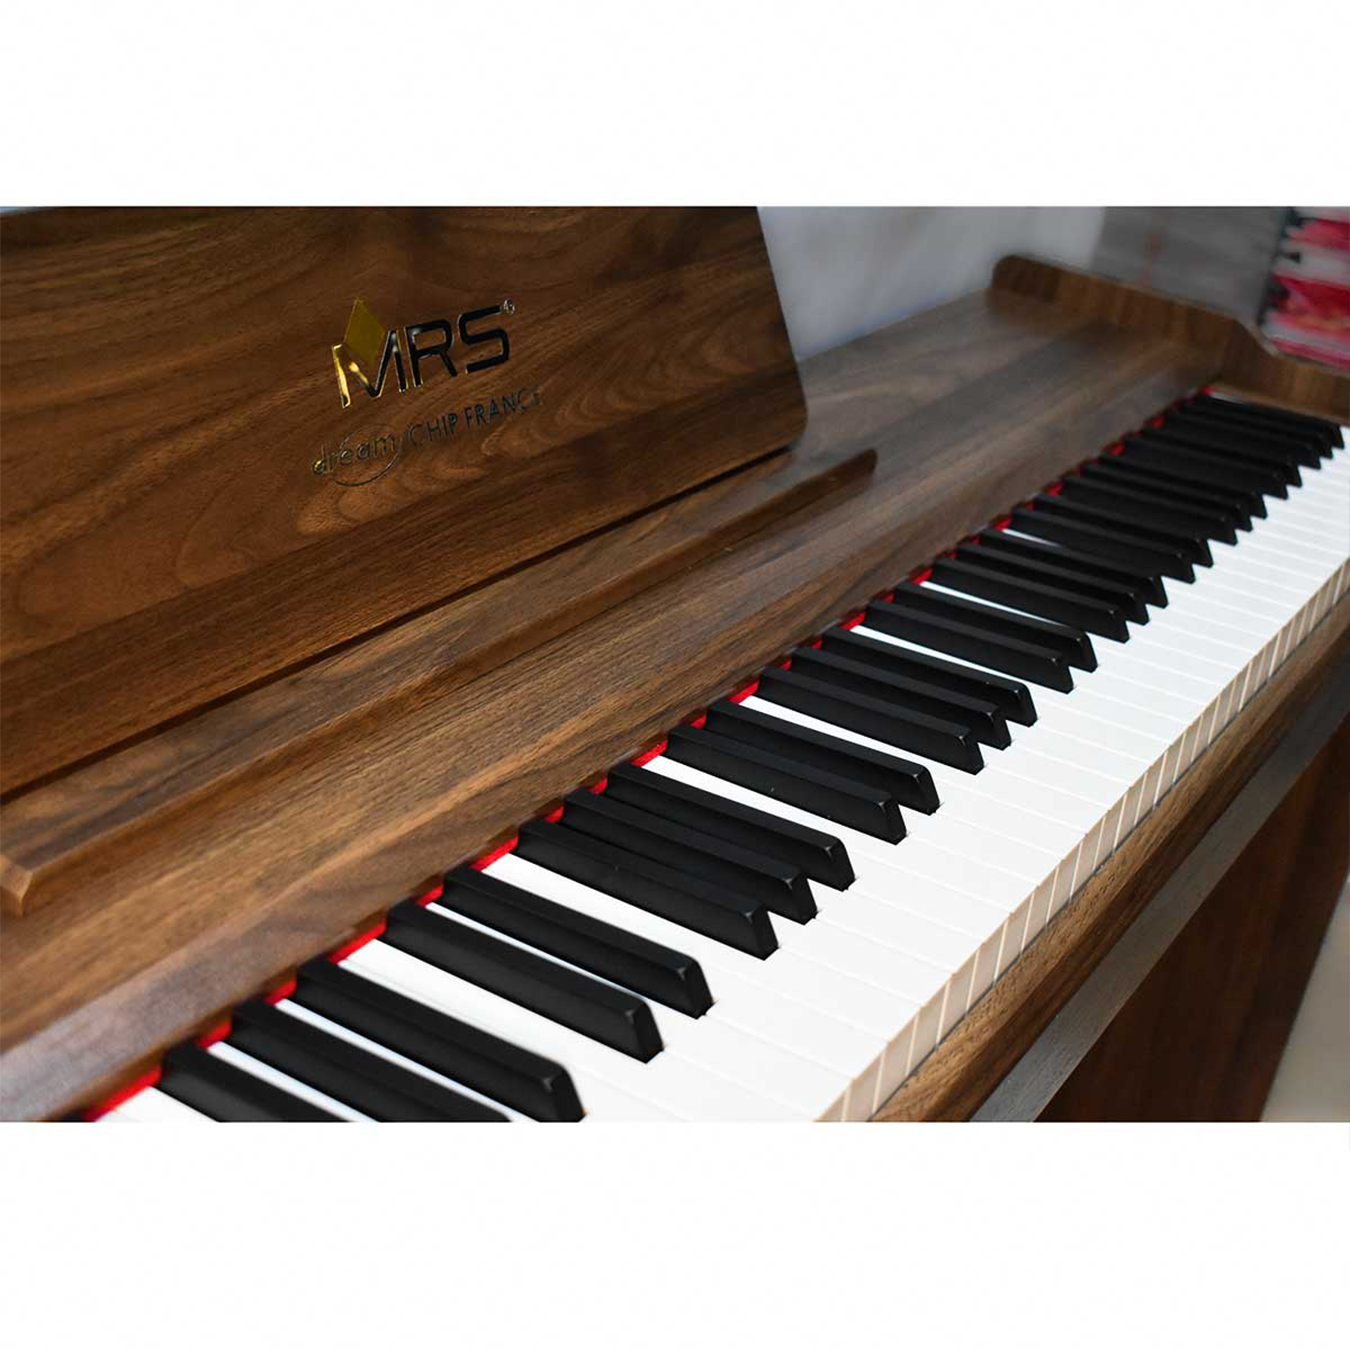 پیانو دیجیتال ام آر اس مدل jdp-70